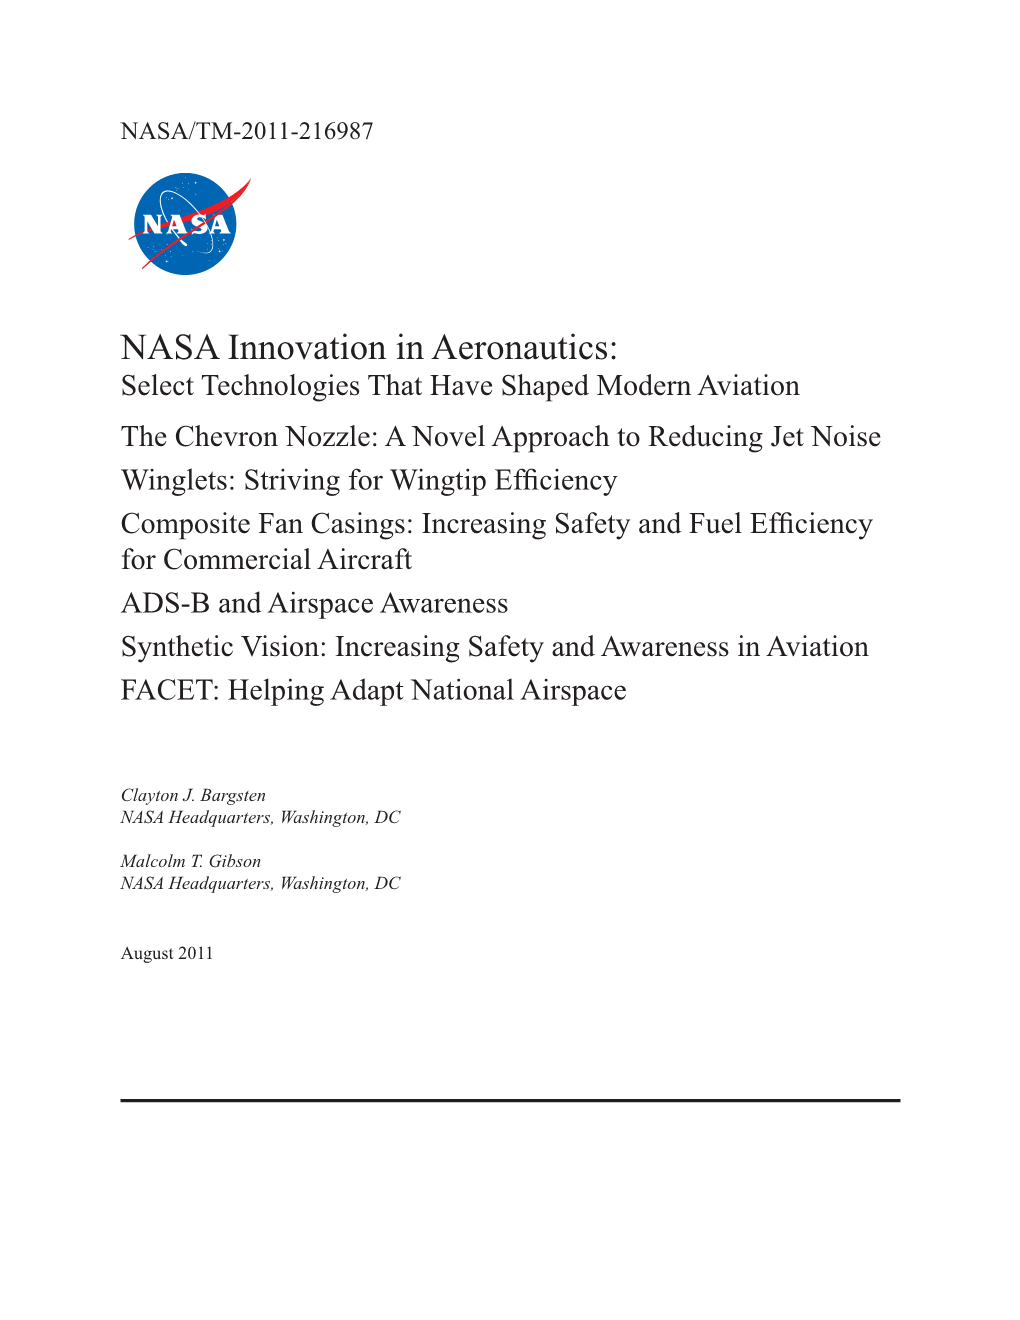 NASA Innovation in Aeronautics